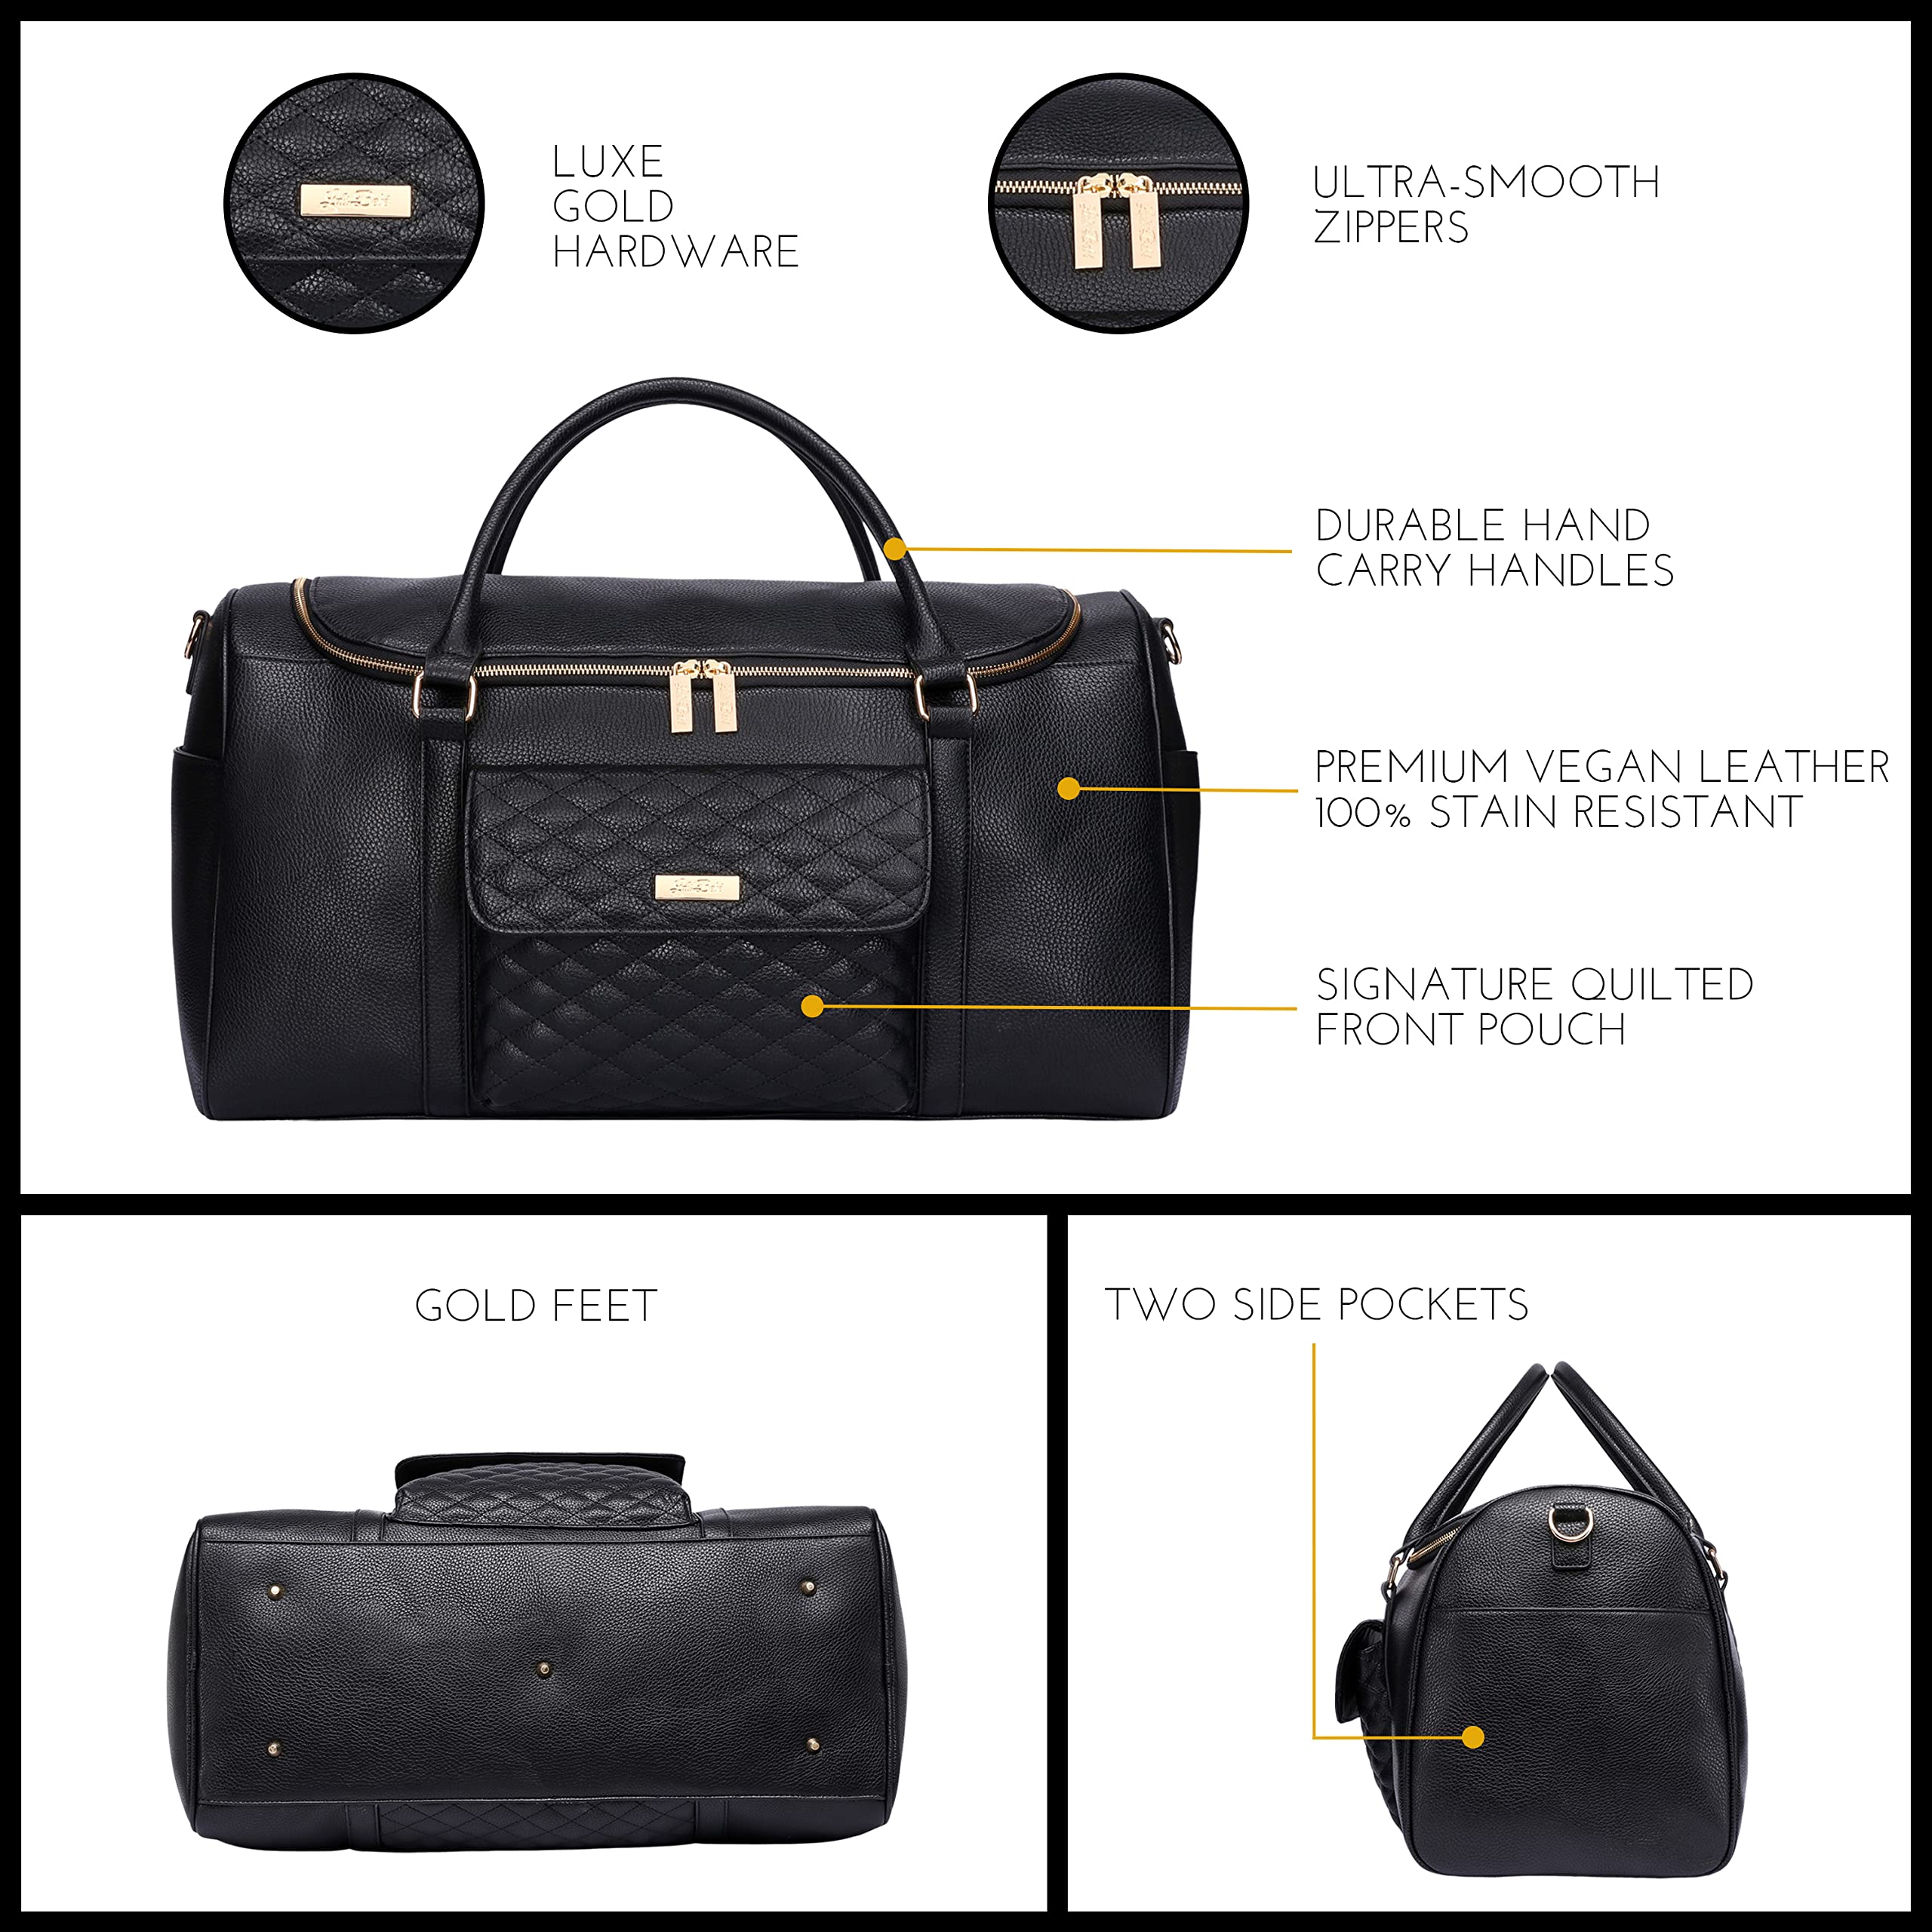 Monaco Petit Diaper Bag + Travel Duffel Bag by Luli Bebe - Chic Vegan Leather (Ebony Black)